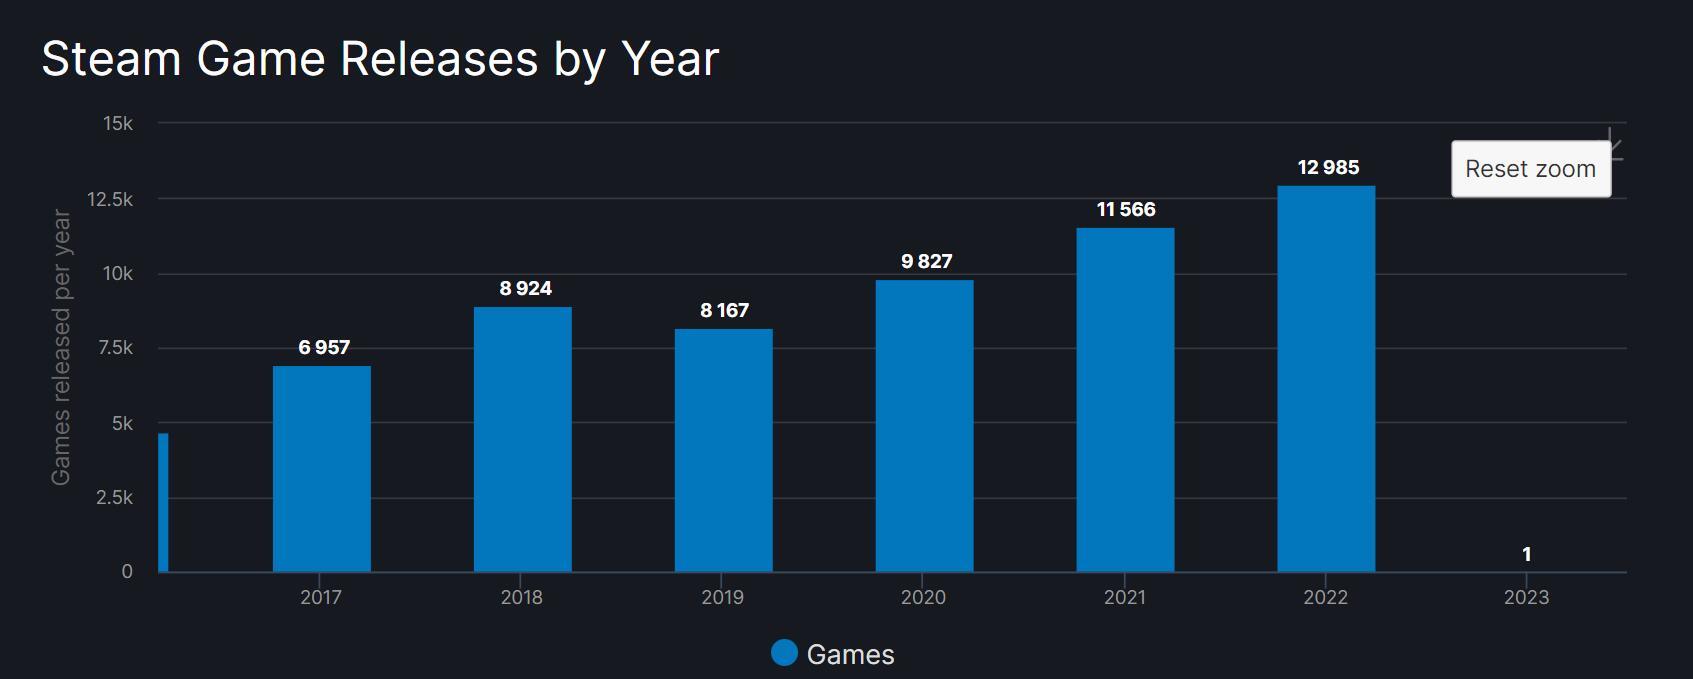 【PC游戏】2022年Steam总共推出12985款新游戏！10月份最热闹-第1张